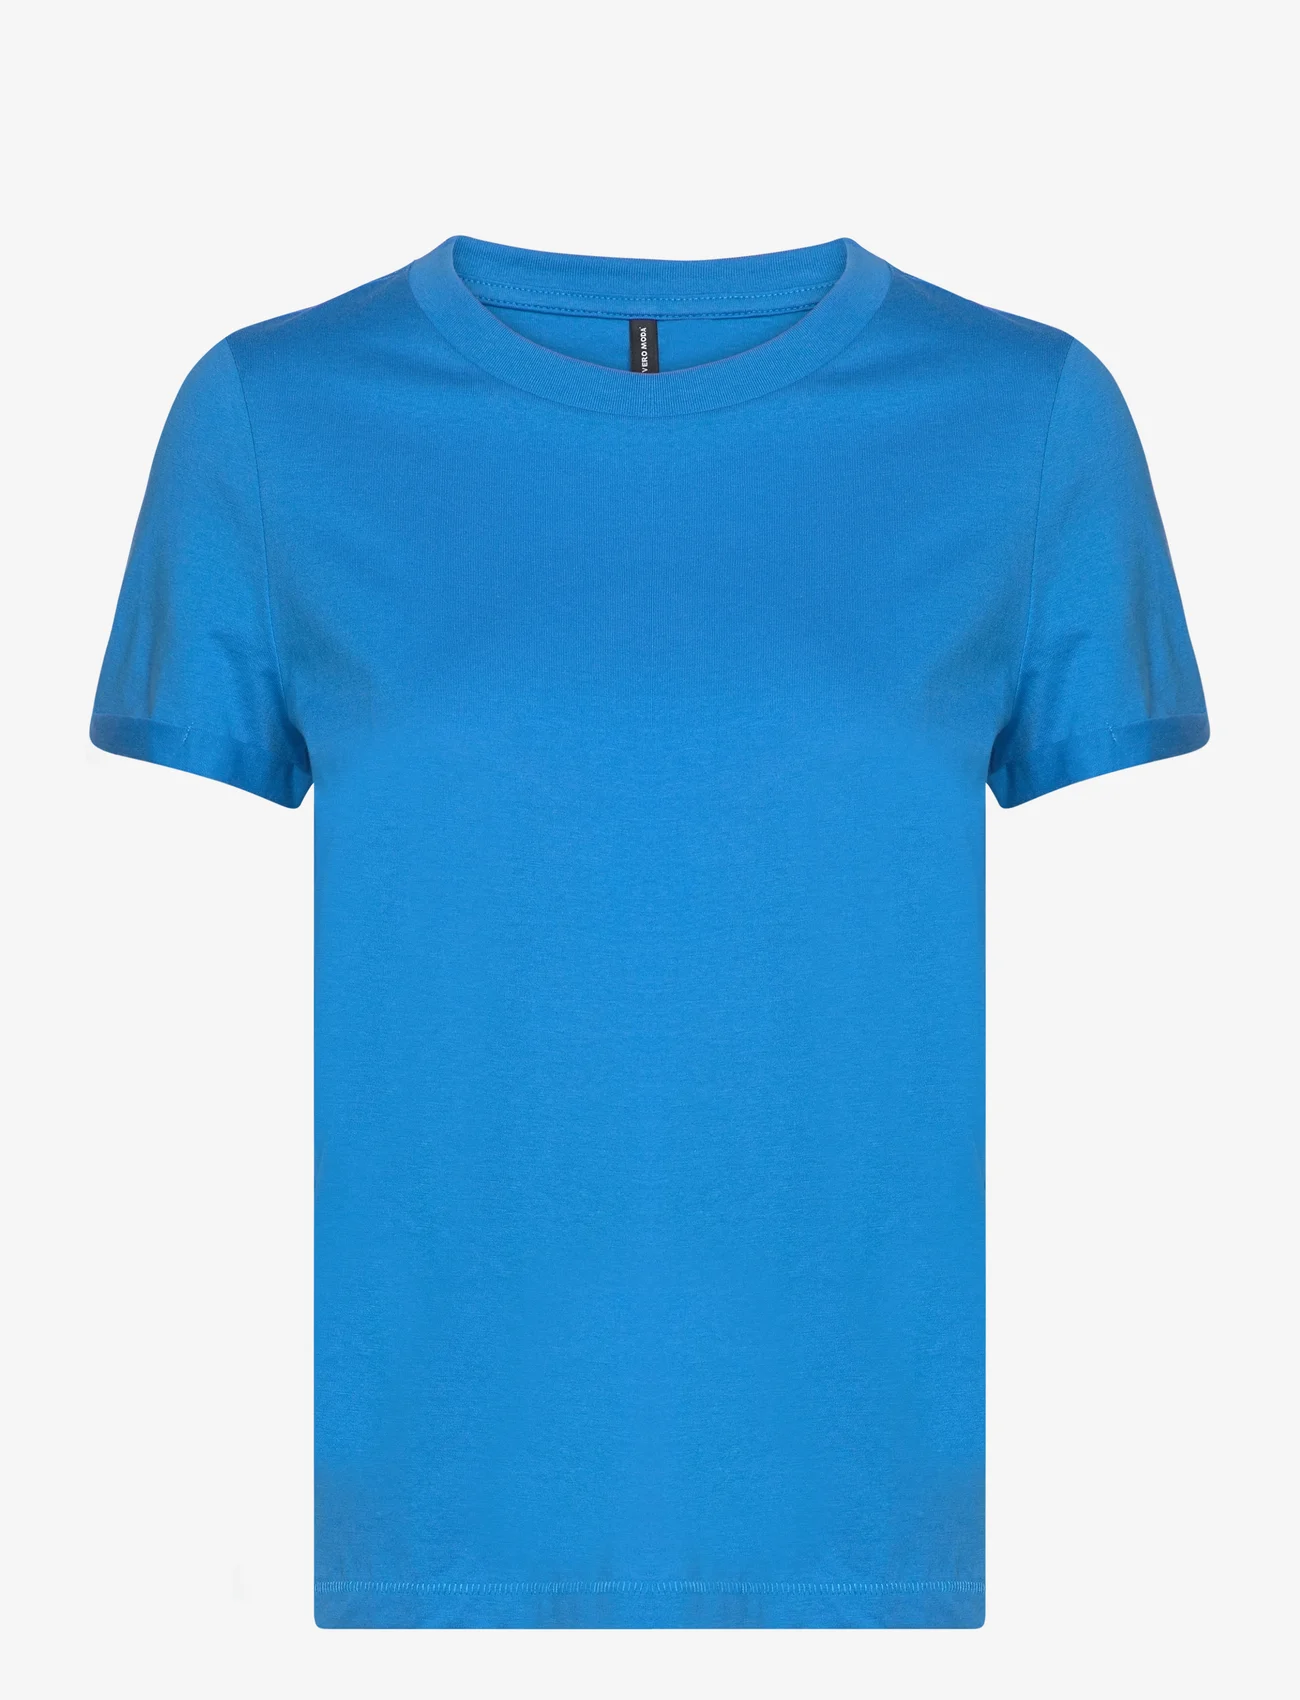 Vero Moda - VMPAULA S/S T-SHIRT GA NOOS - t-shirts - ibiza blue - 0